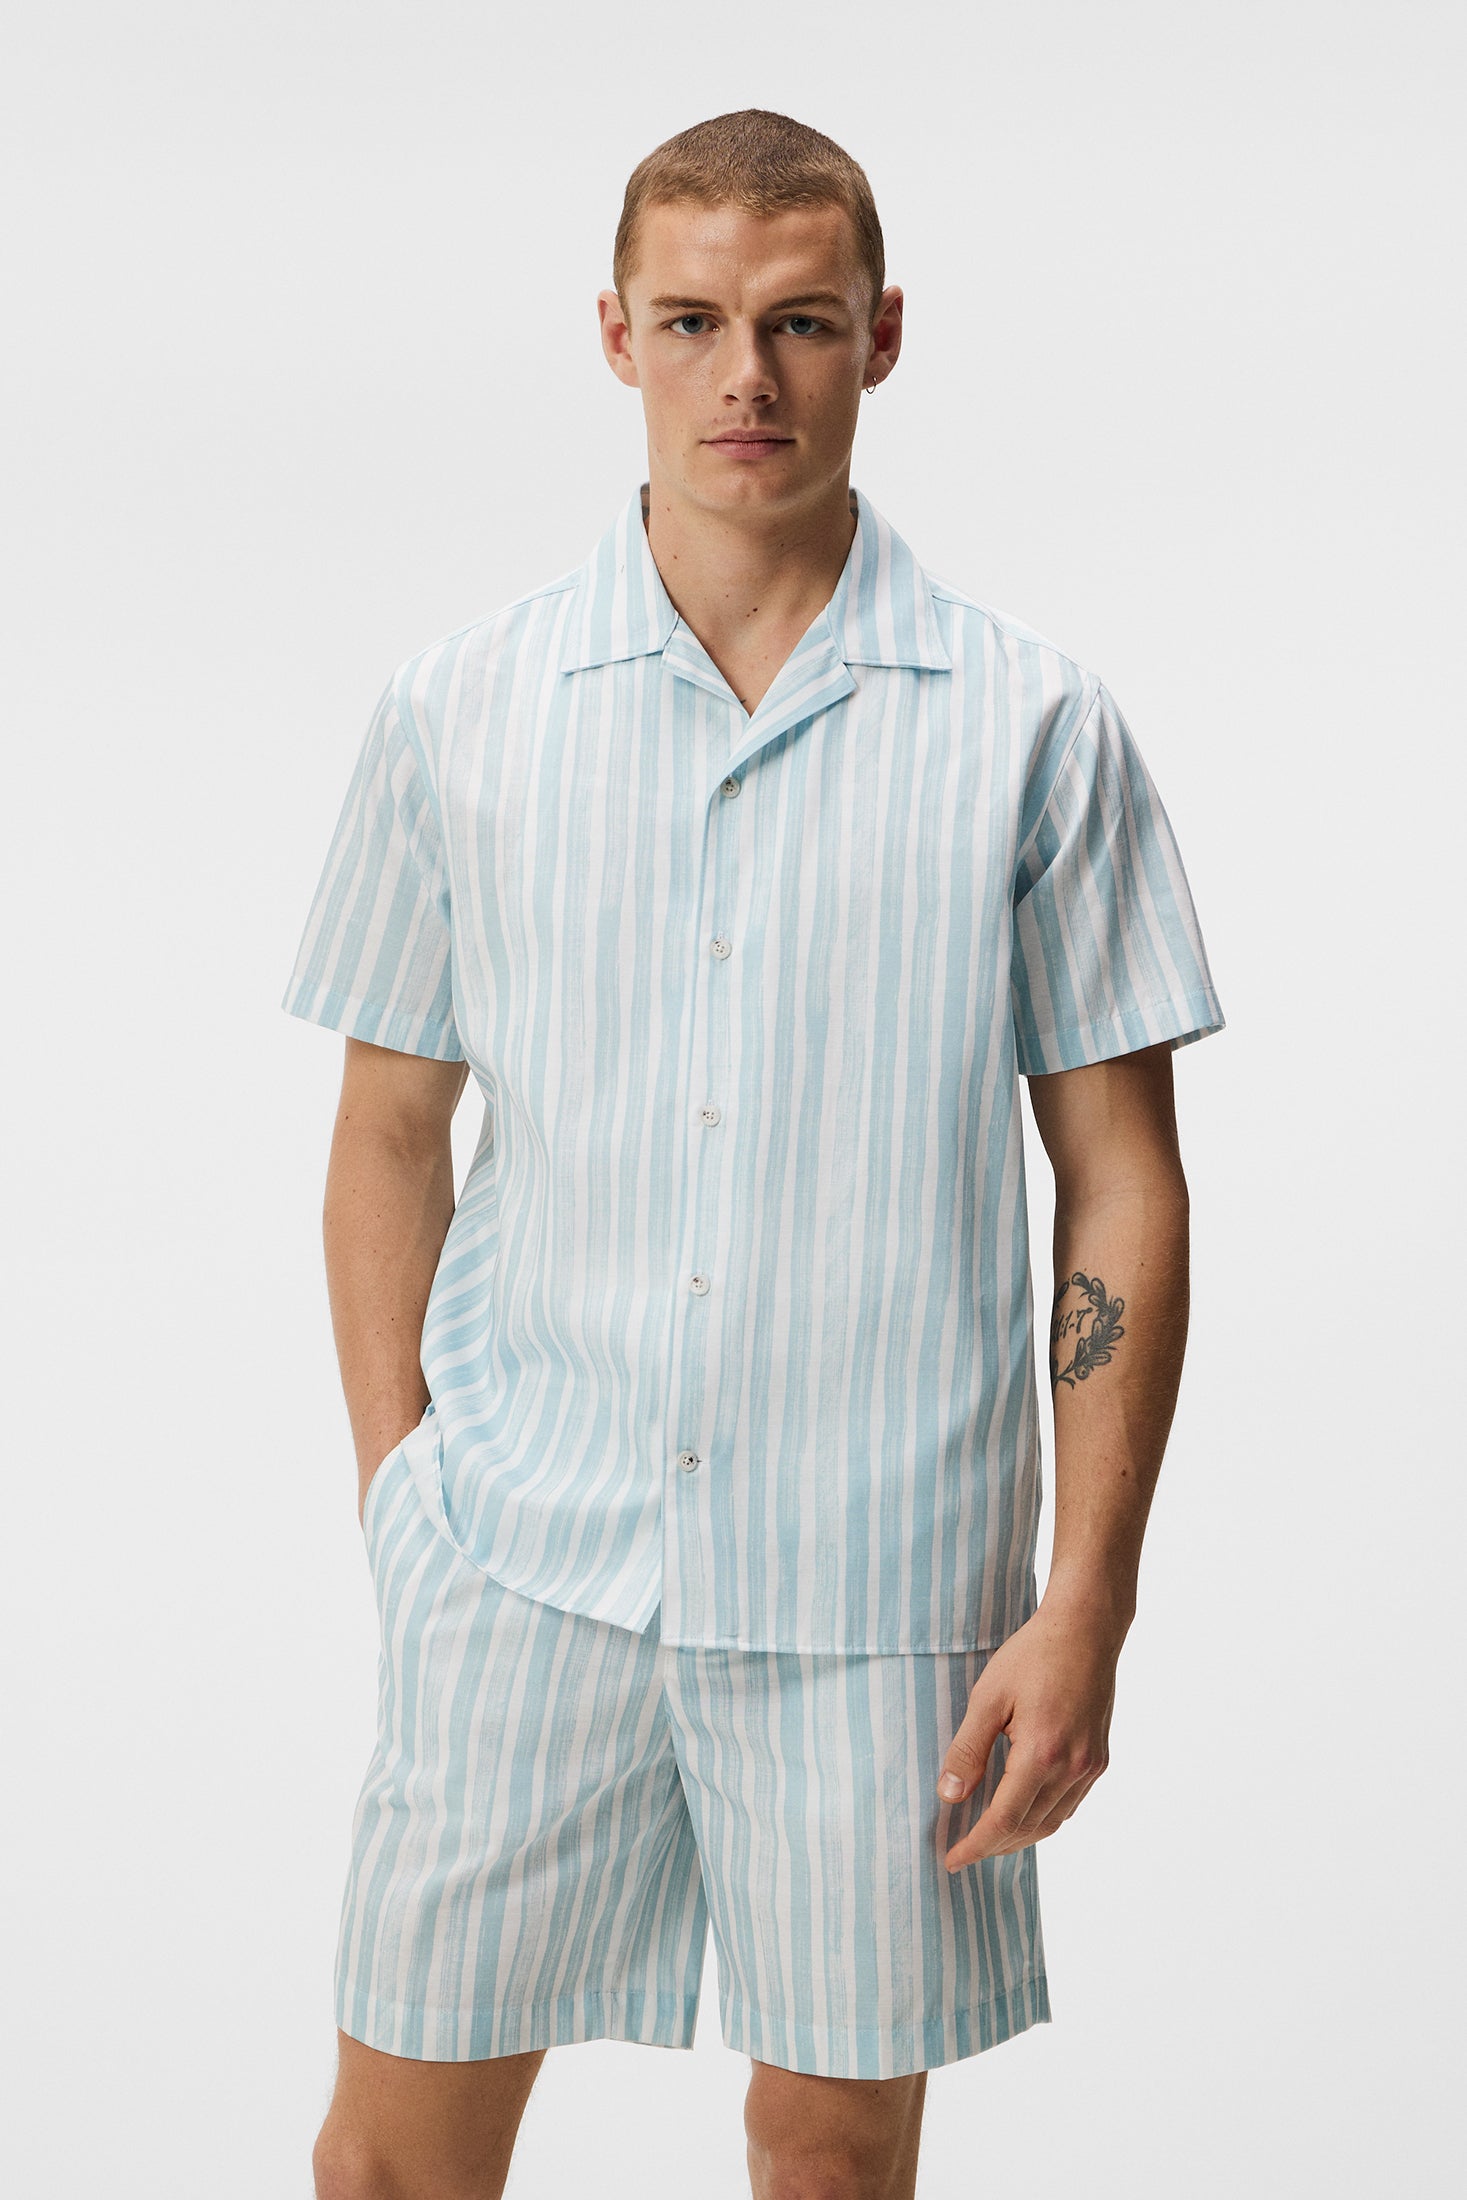 Elio Painted Stripe Shirt